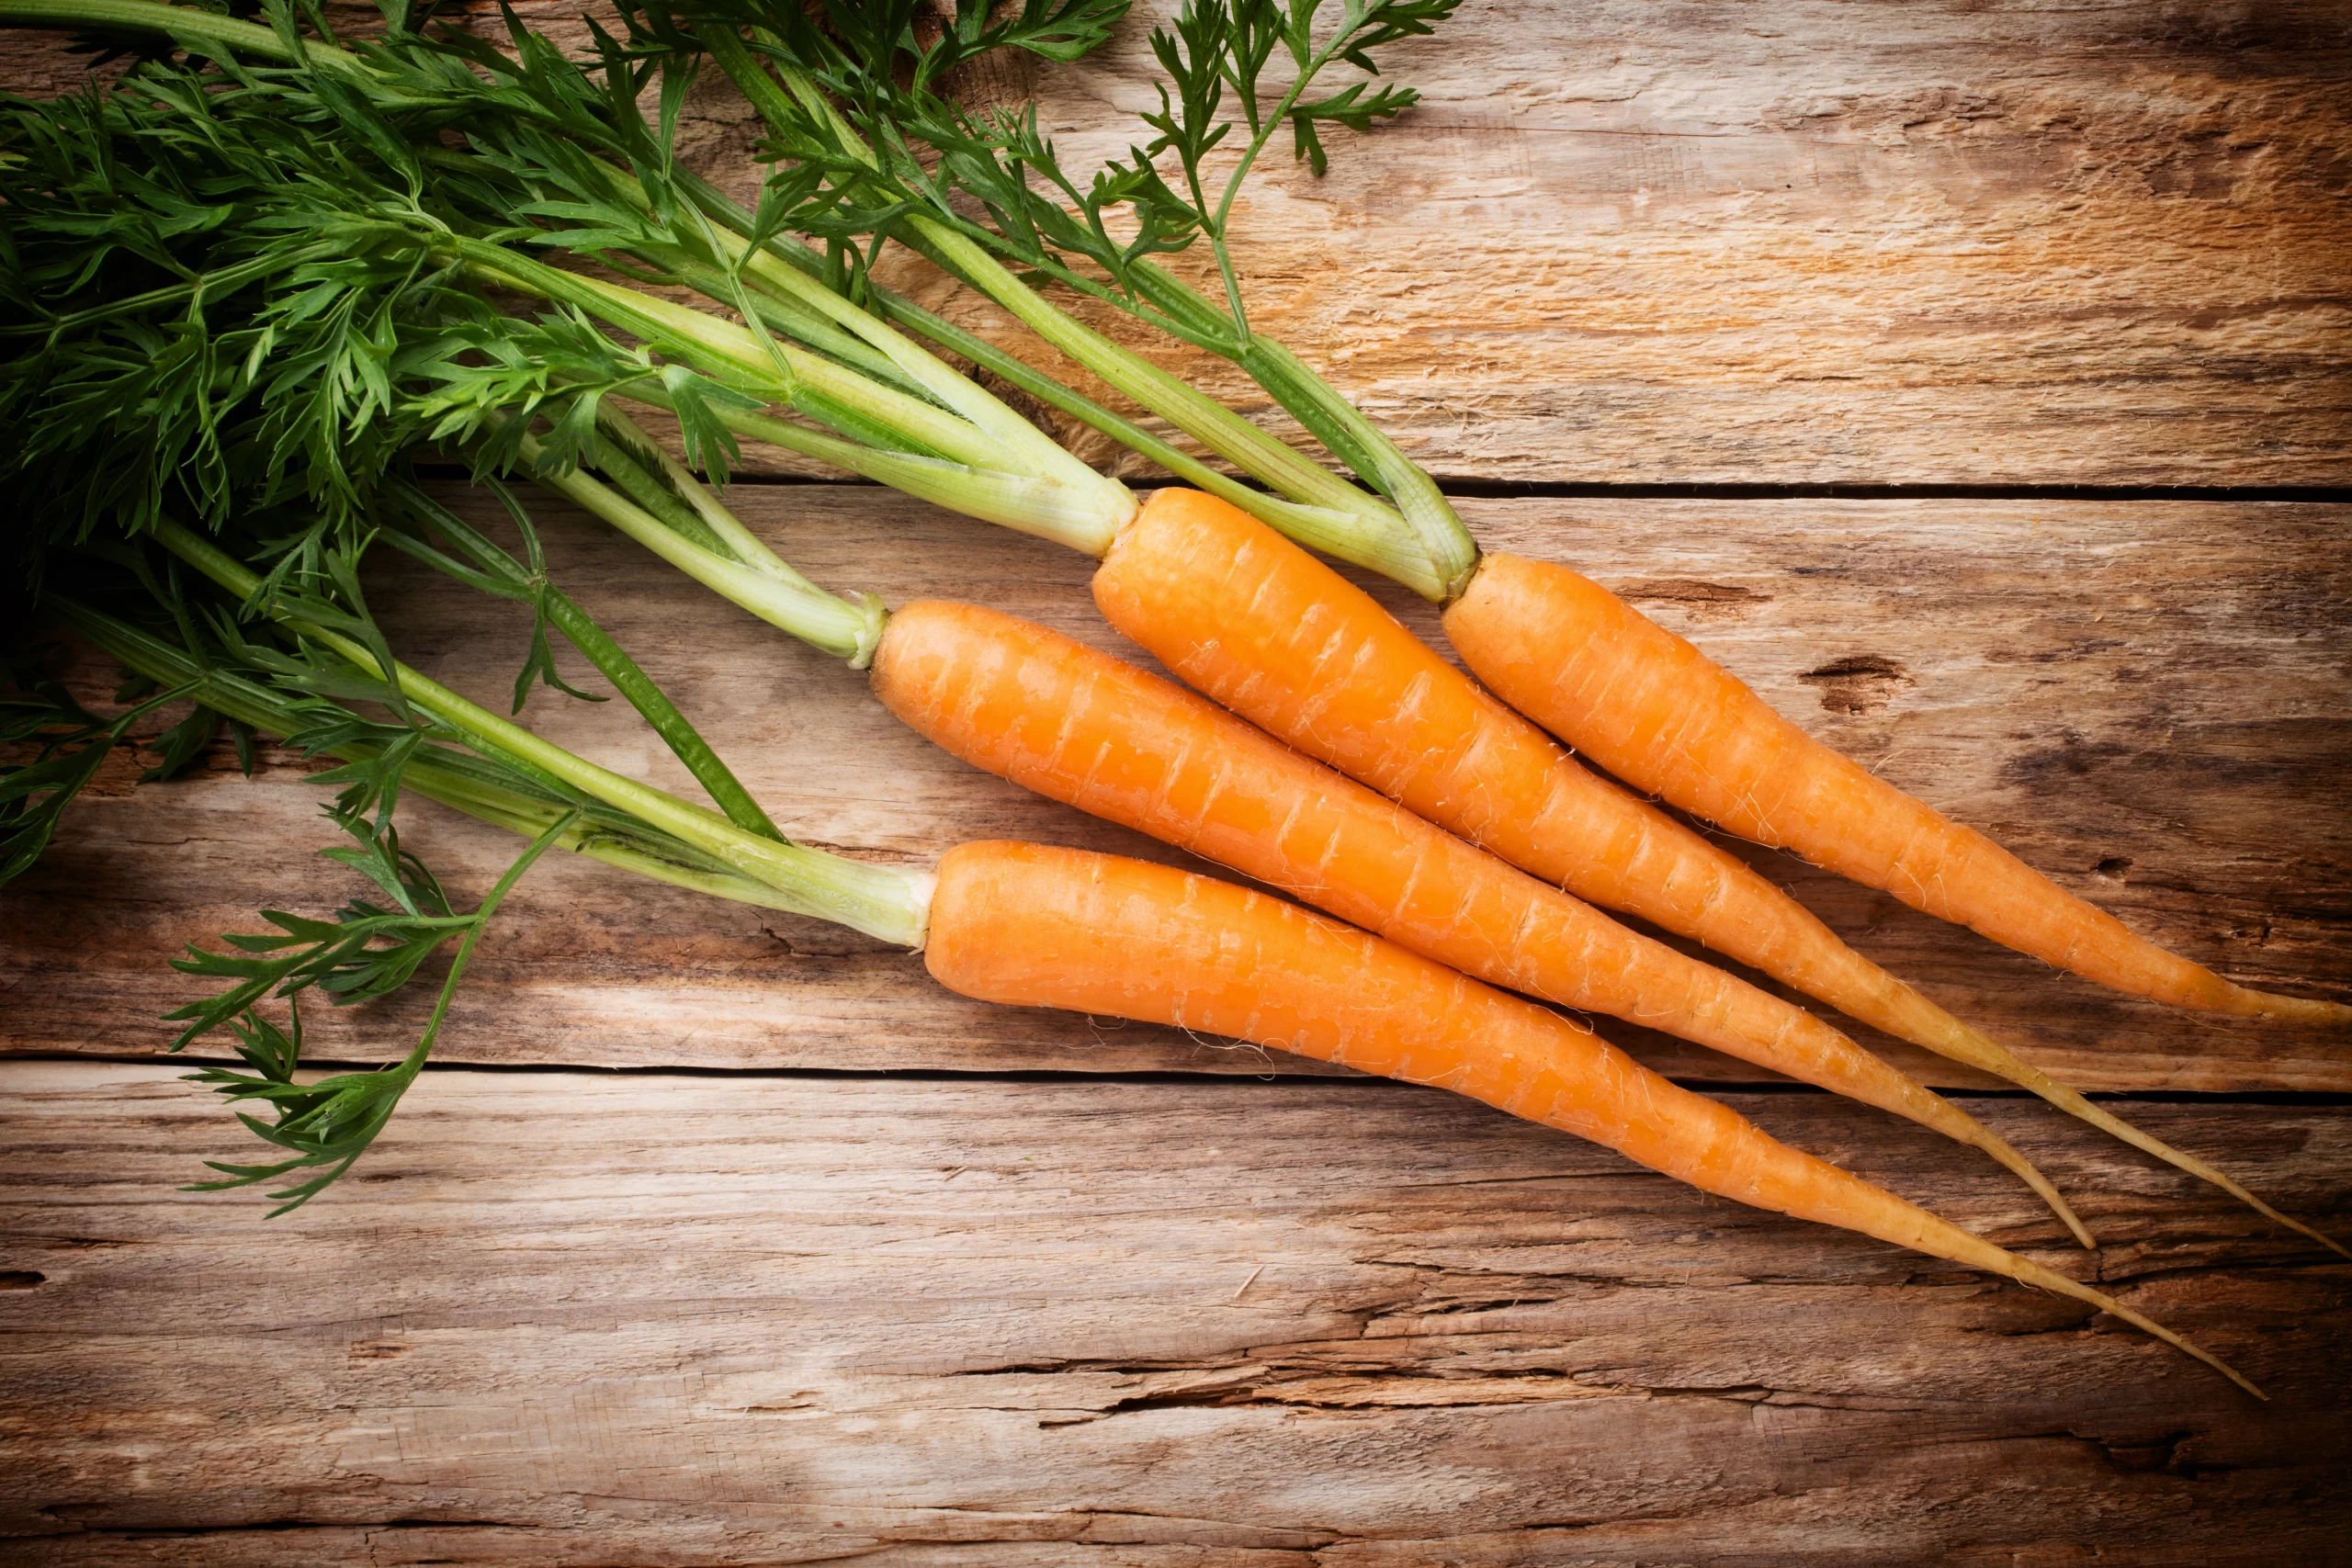 Growing Carrots